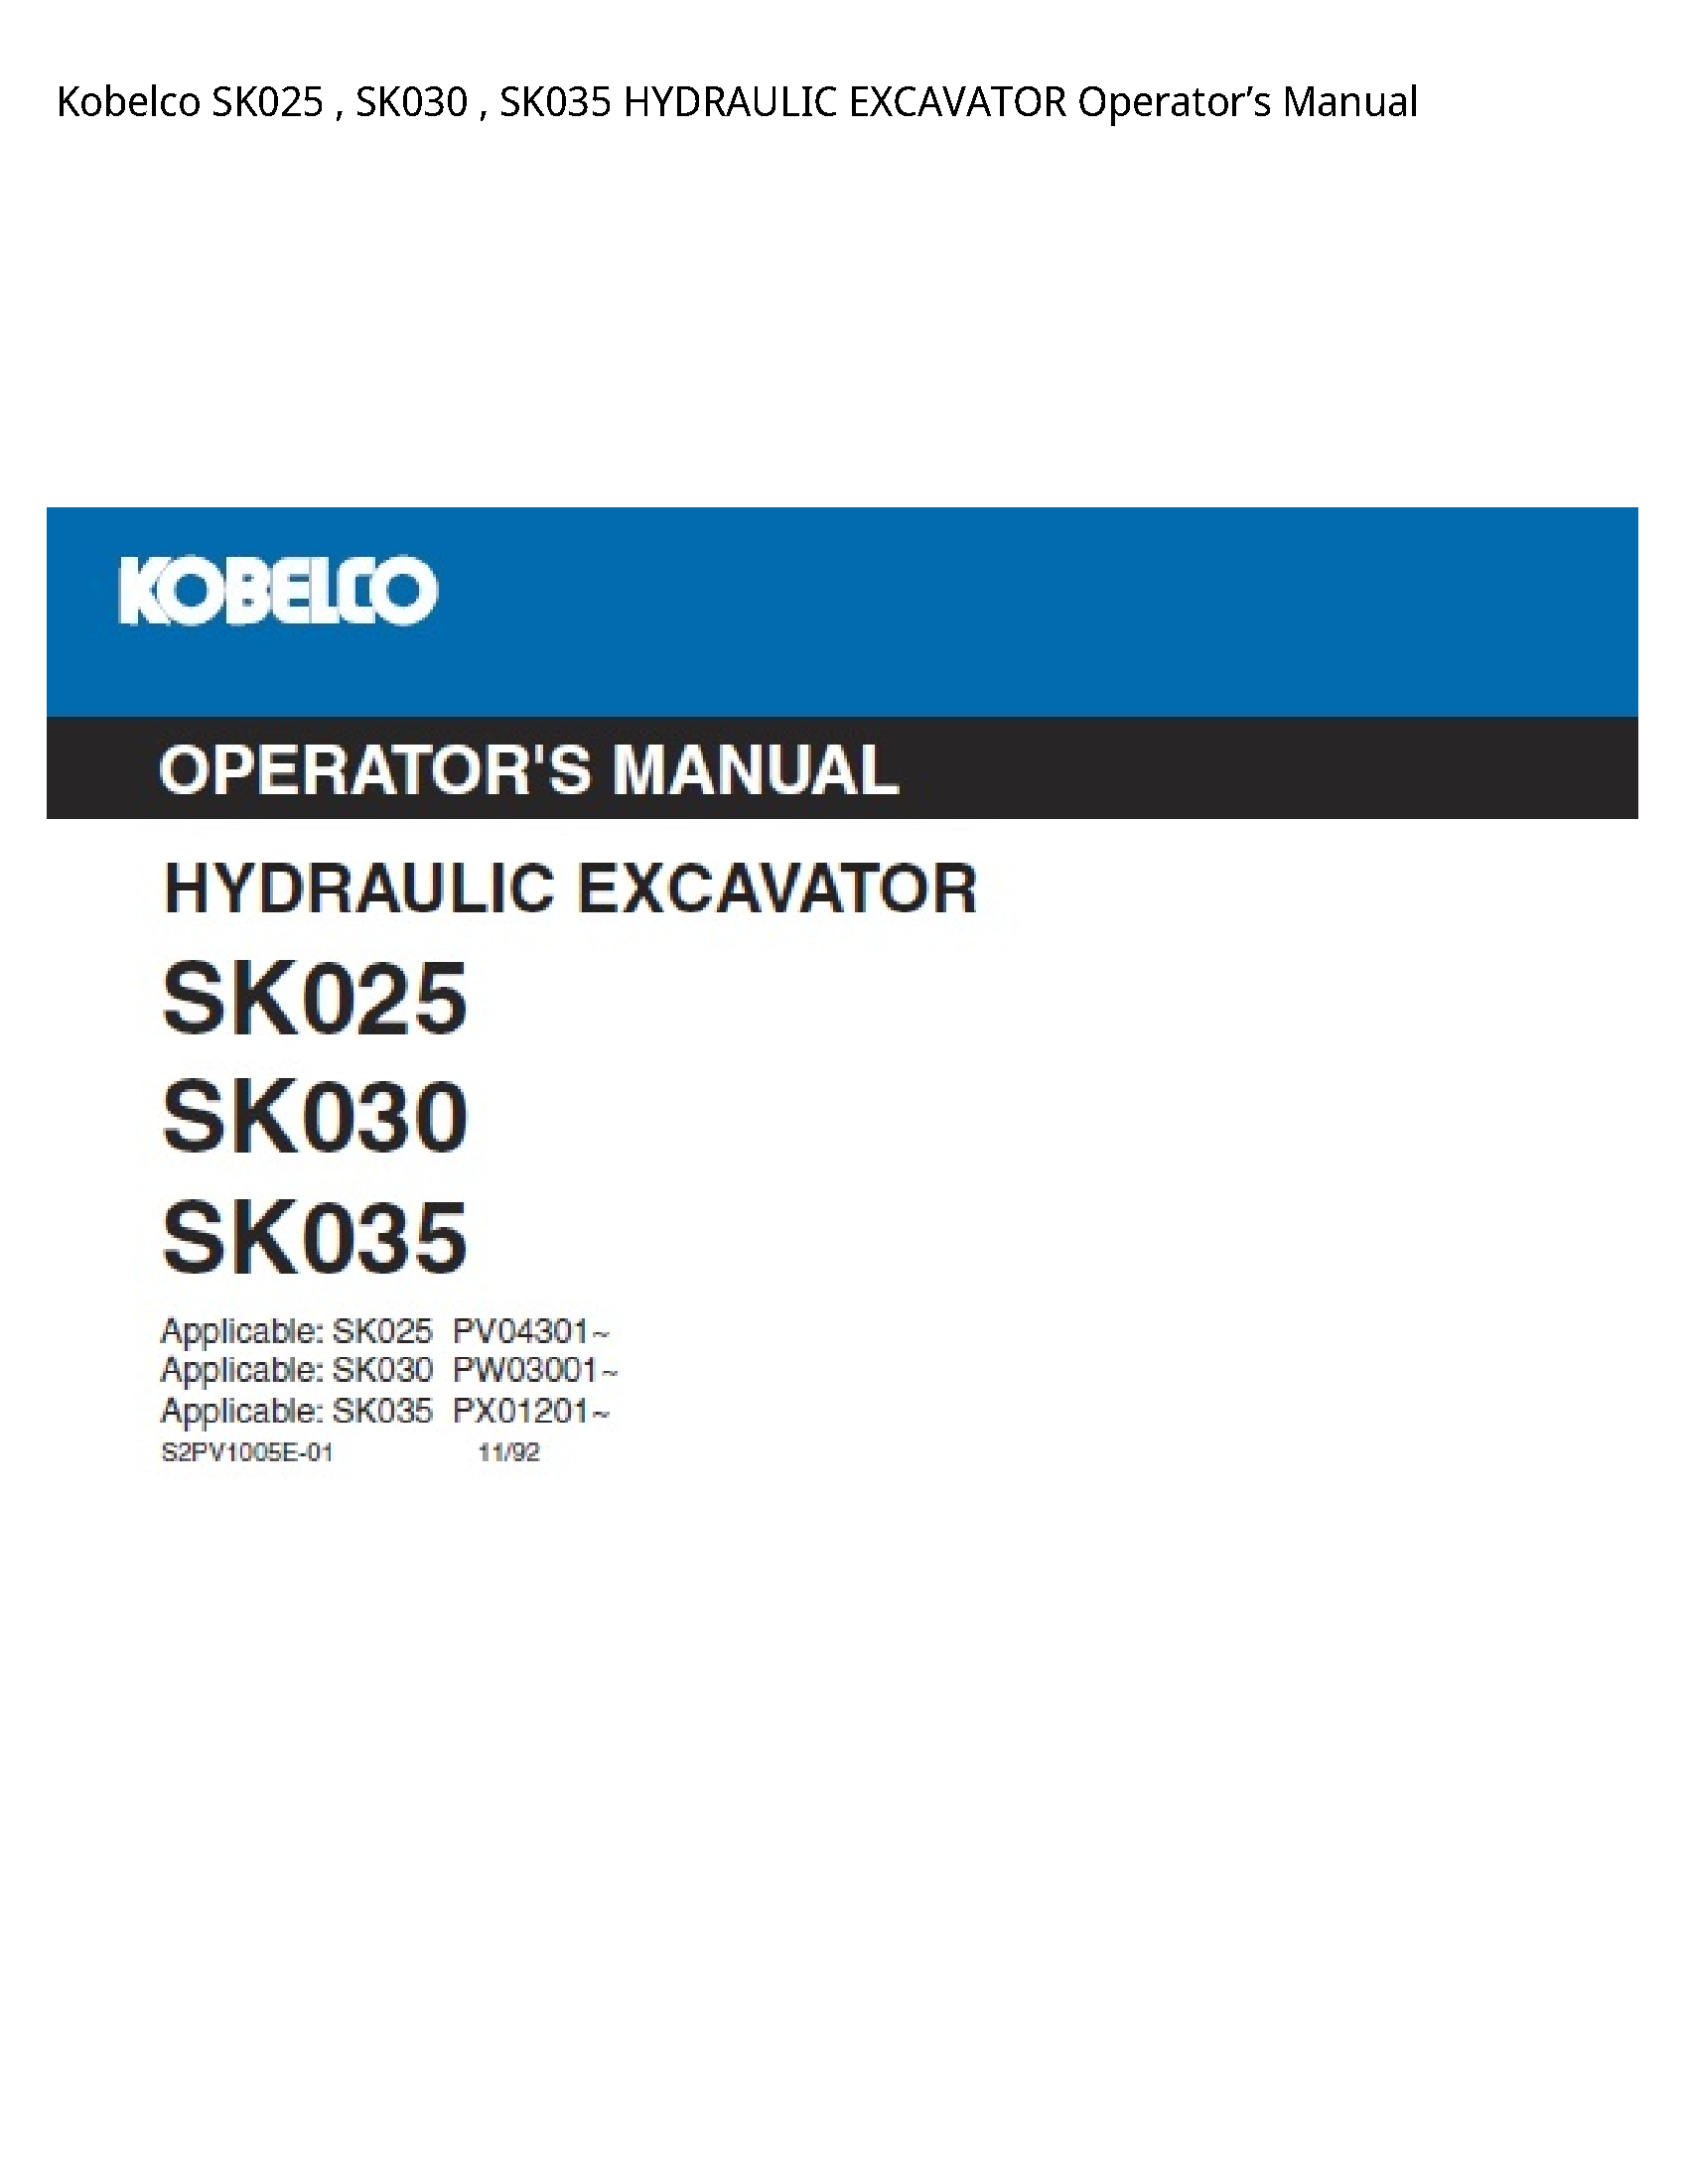 Kobelco SK025 HYDRAULIC EXCAVATOR Operator’s manual